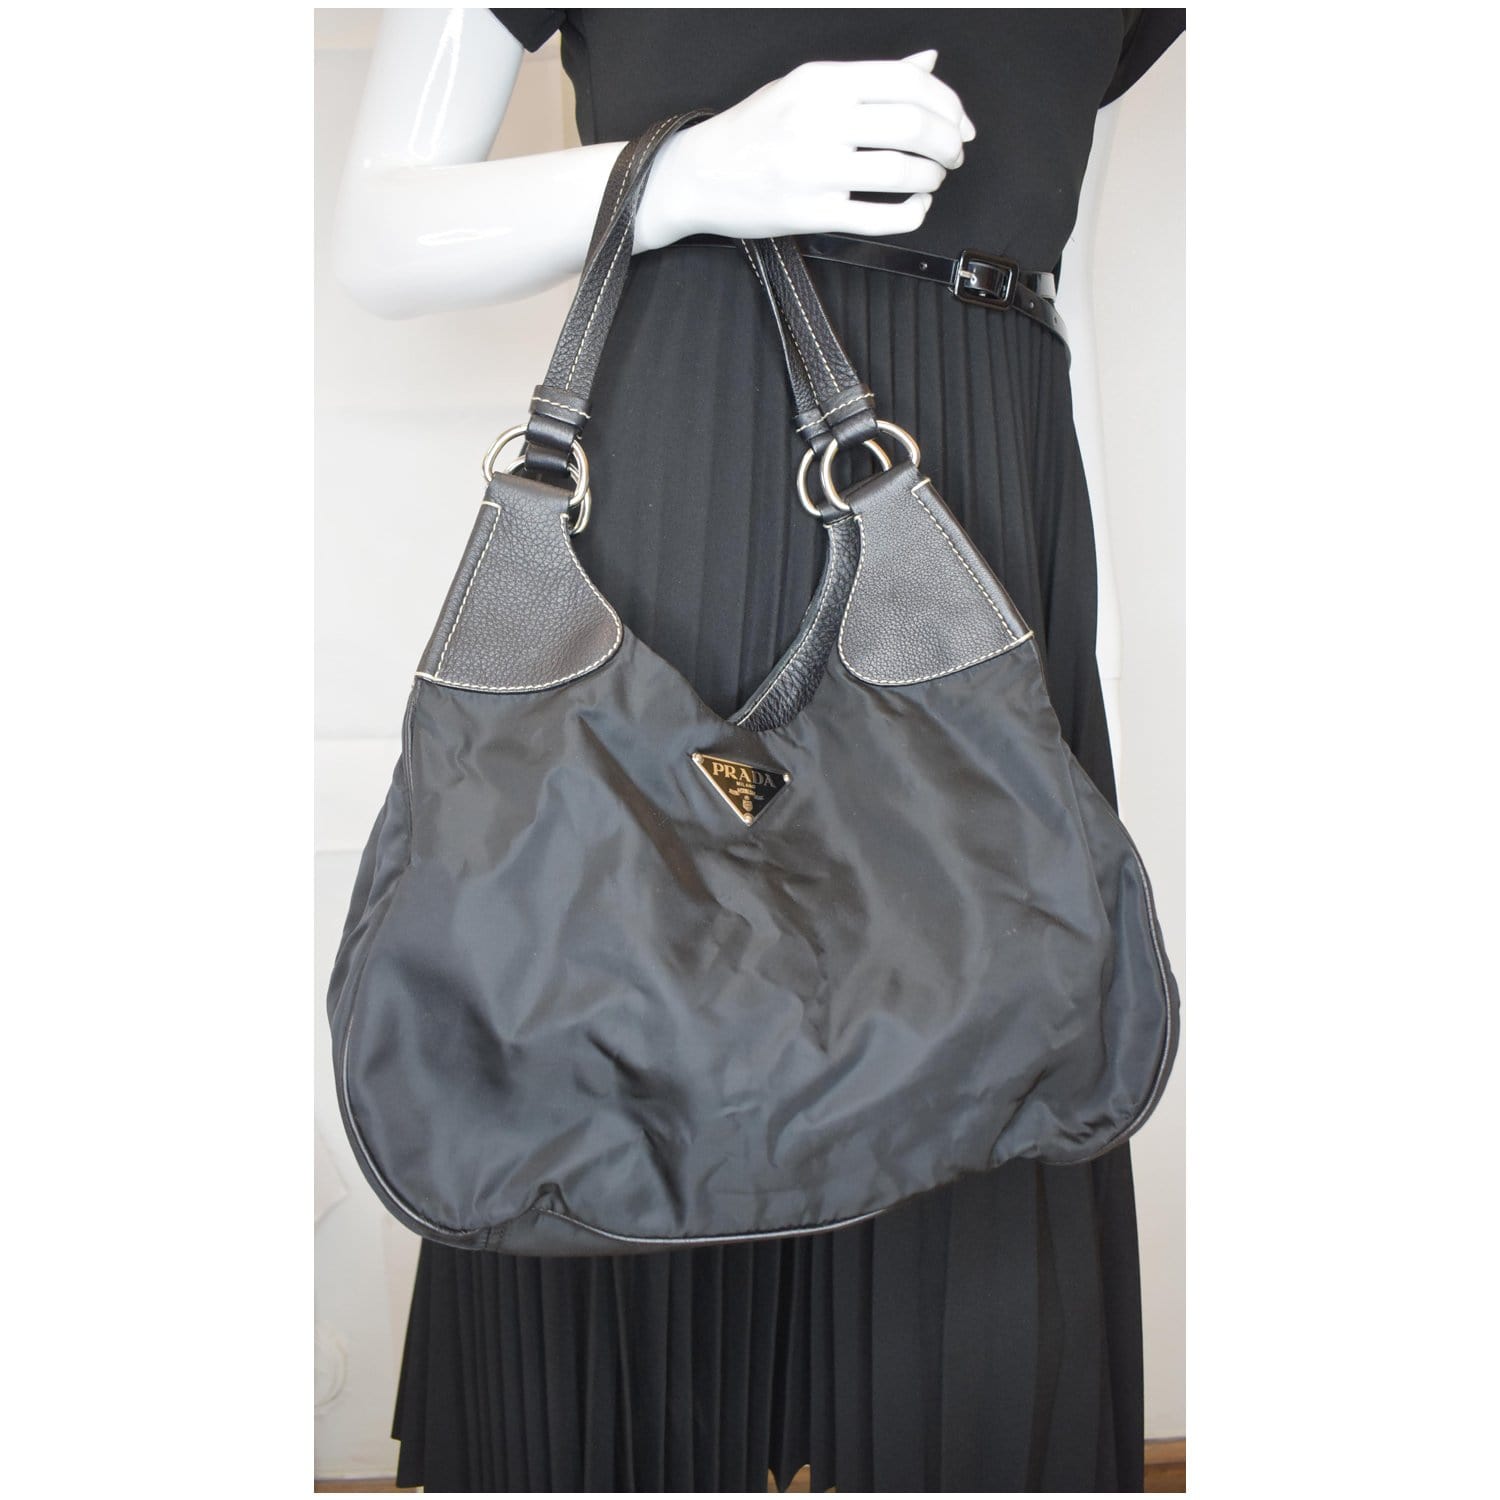 Prada Leather Bag Black